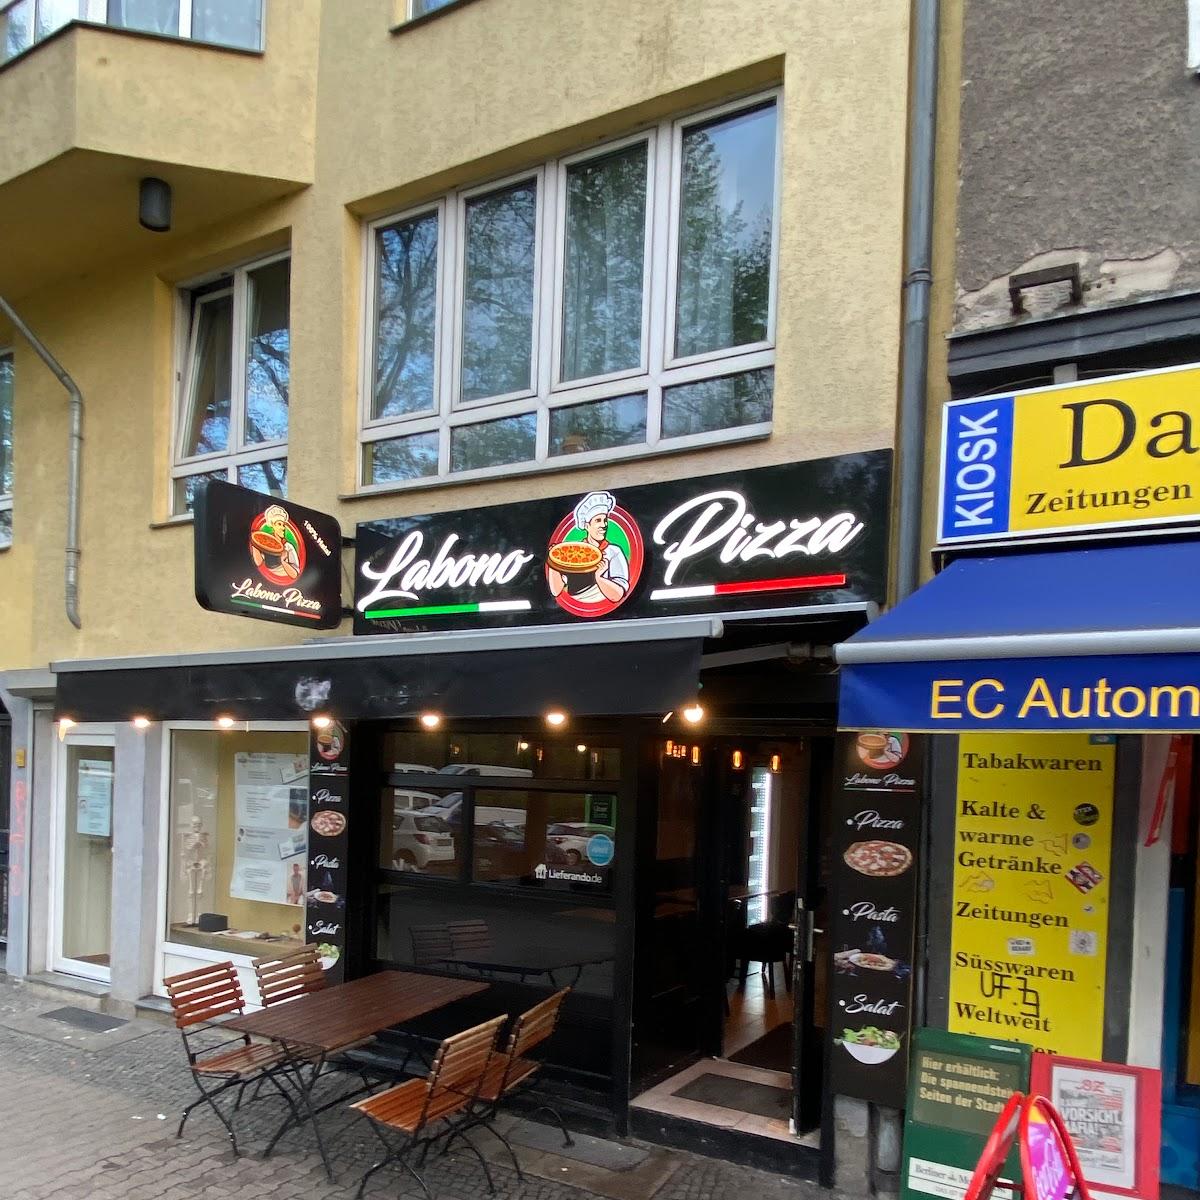 Restaurant "La Bono" in Berlin